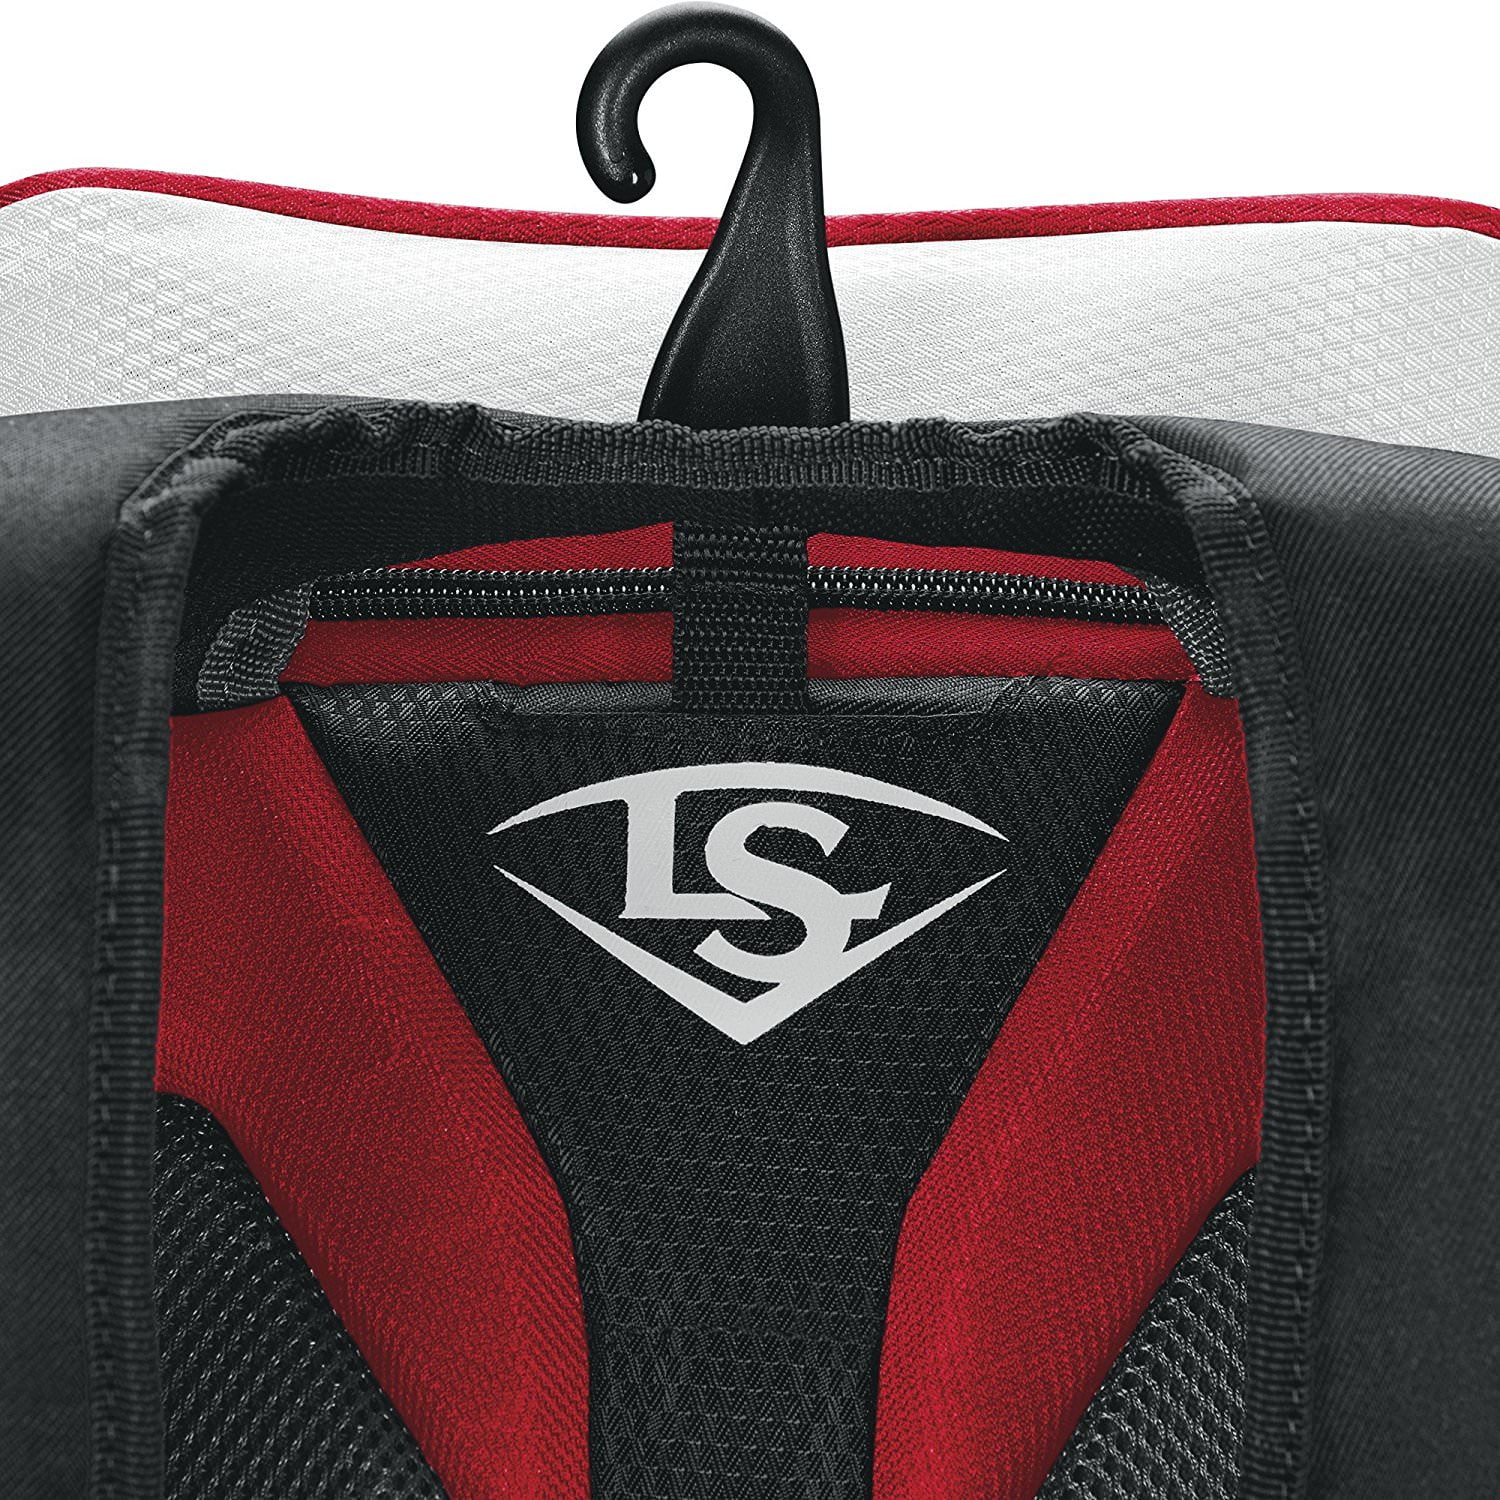 Louisville Slugger Prime Stick Pack Backpack - household items